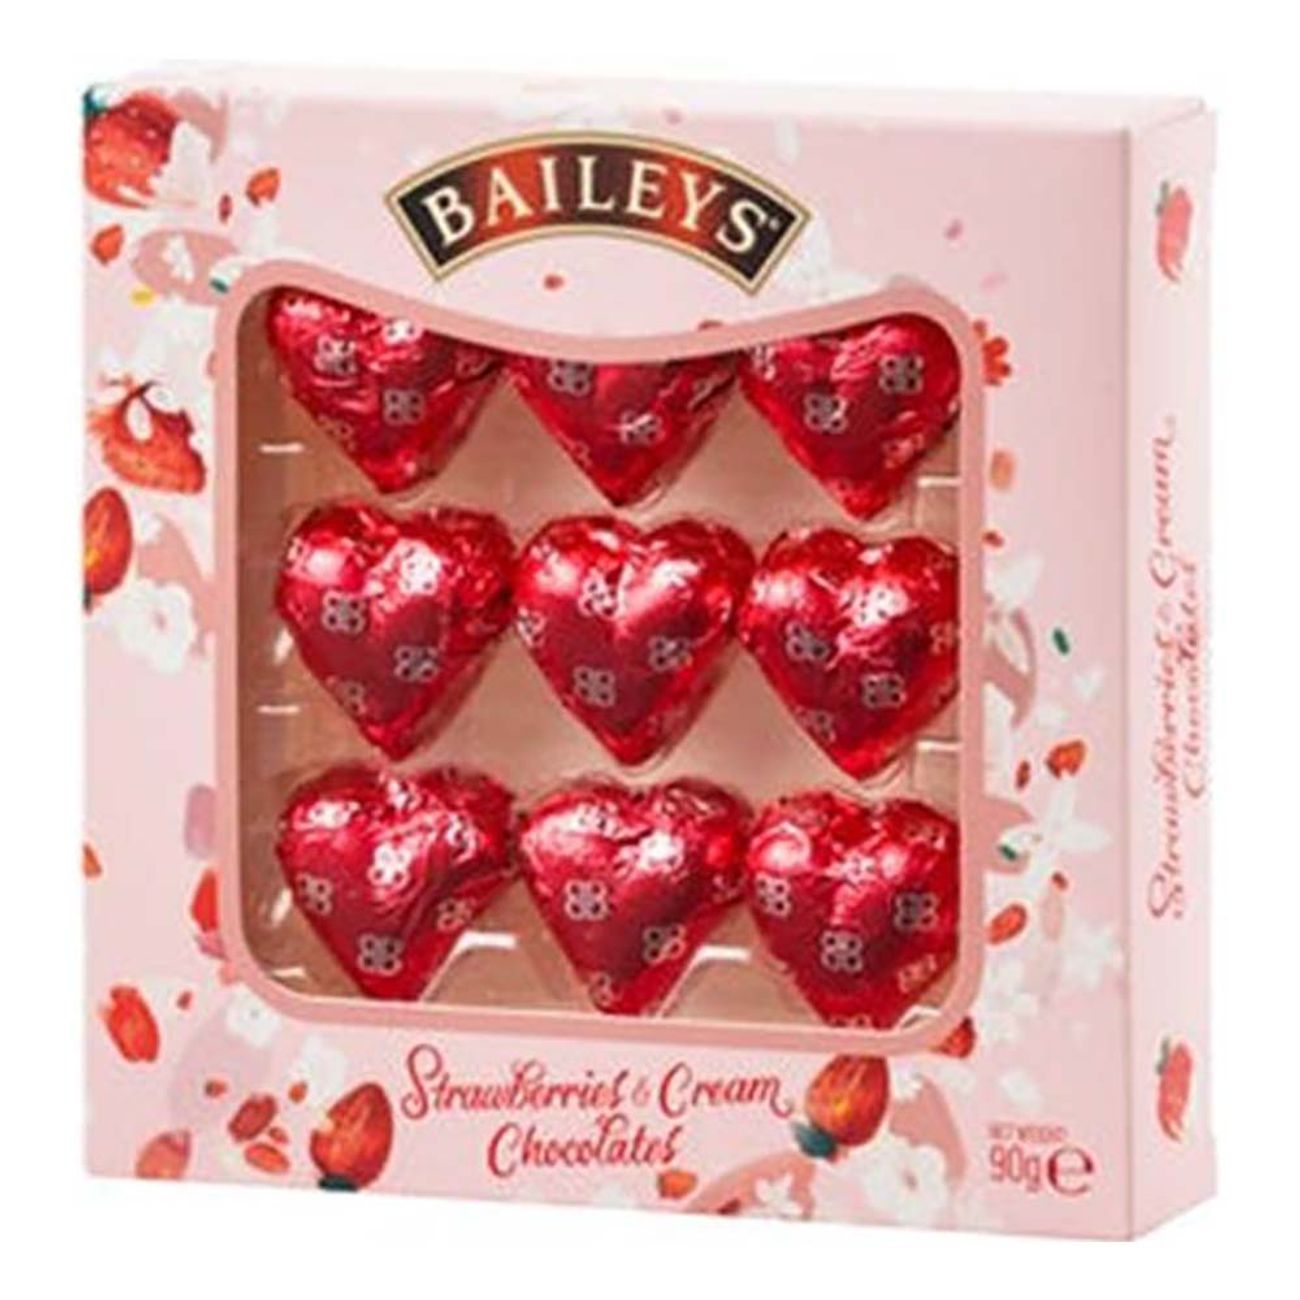 baileys-strawberries-cream-chokladhjartan-1